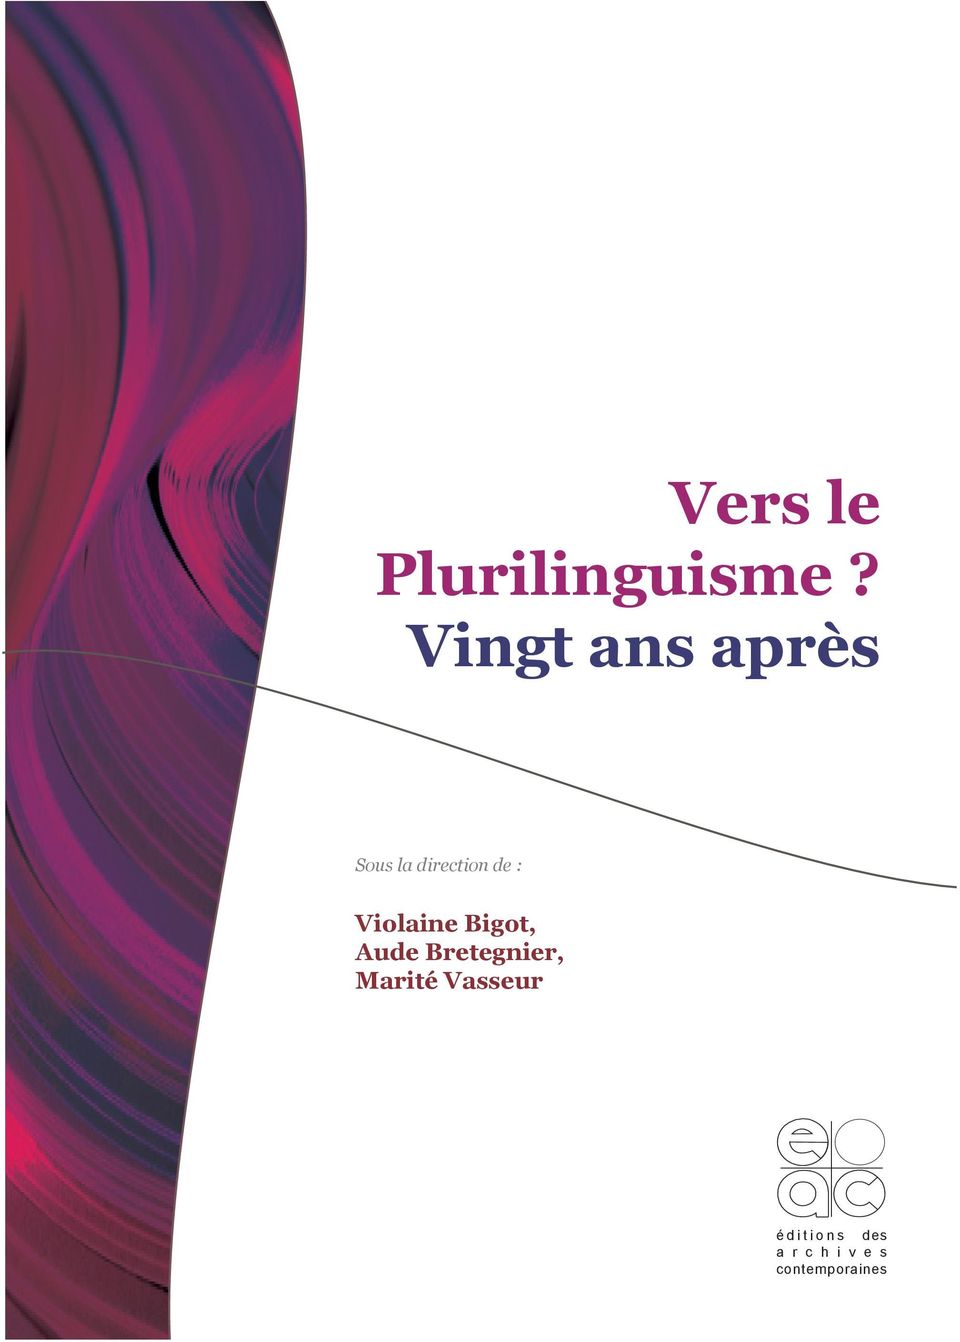 Violaine Bigot, Aude Bretegnier,